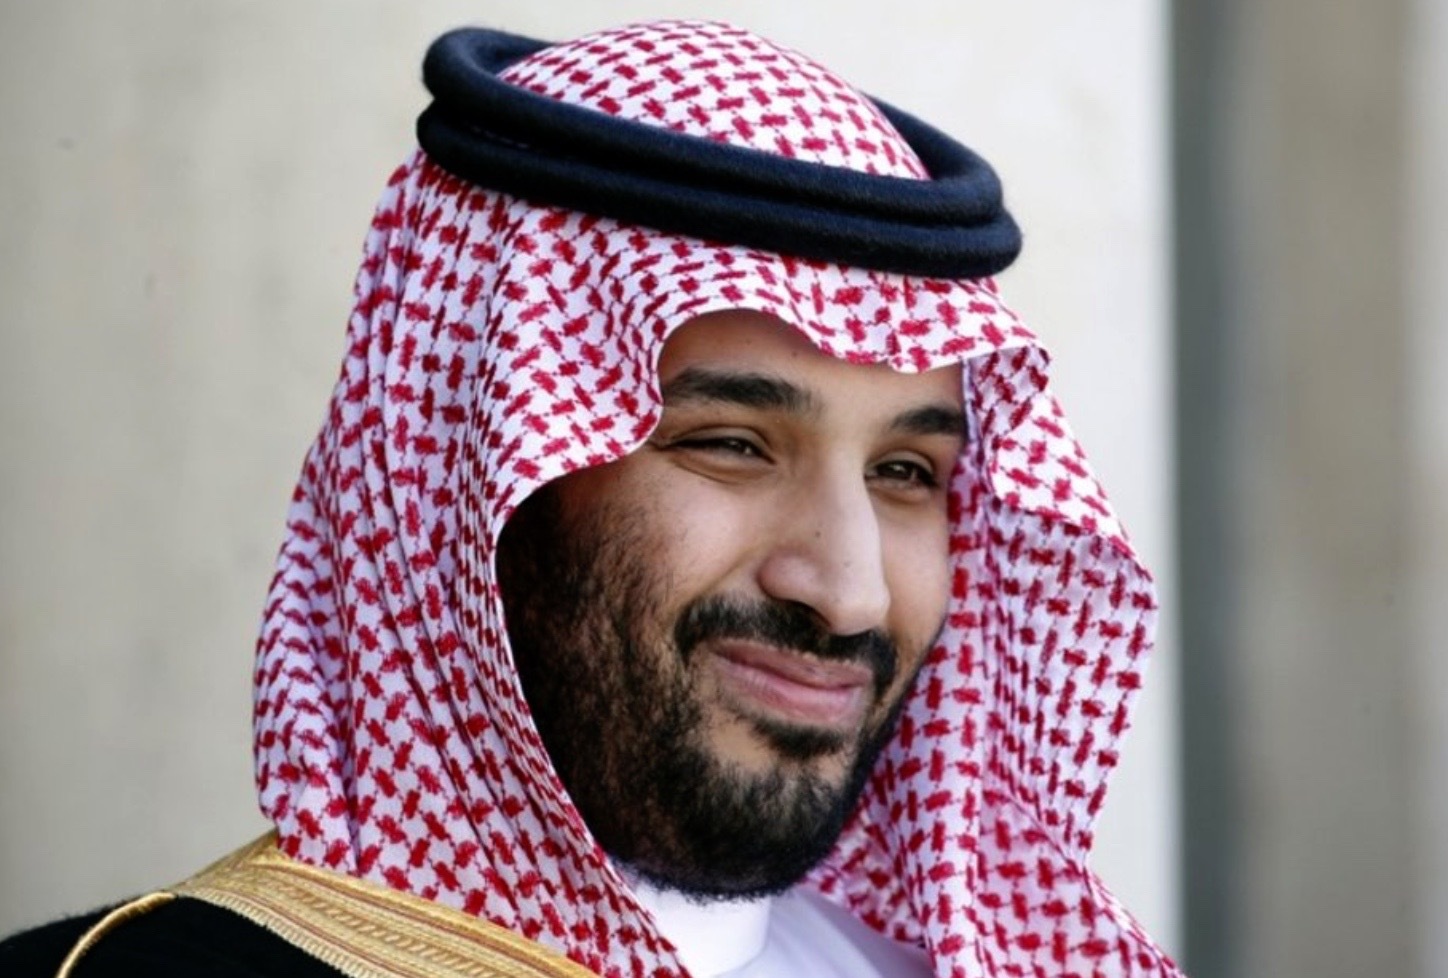 Saudi Arabia Says Revamping Education to Combat 'Extremist Ideologies'